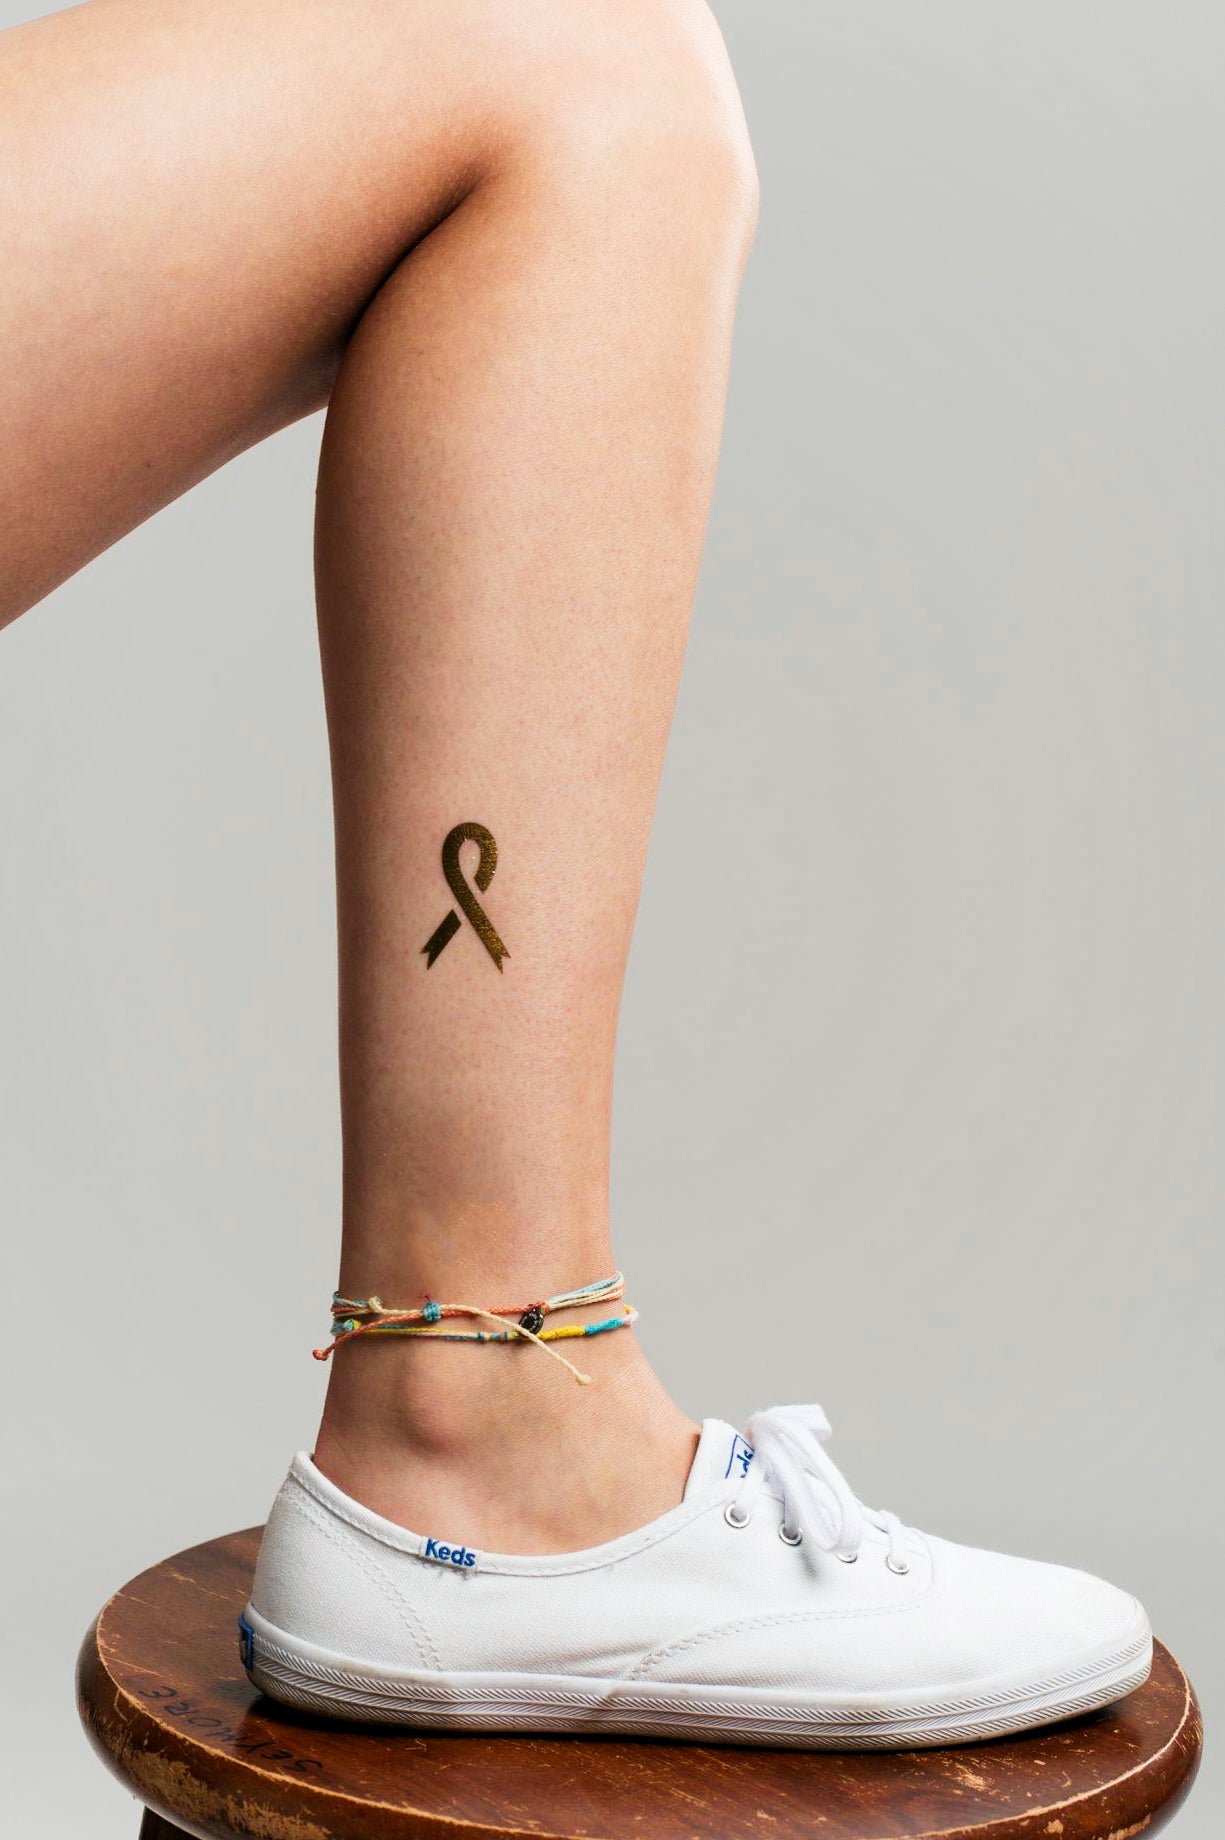 Tattoo uploaded by Jennifer R Donnelly • Cancer tattoo by kermit tattoo  #kermittattoo #cancer #zodiac #astrology #horoscope • Tattoodo